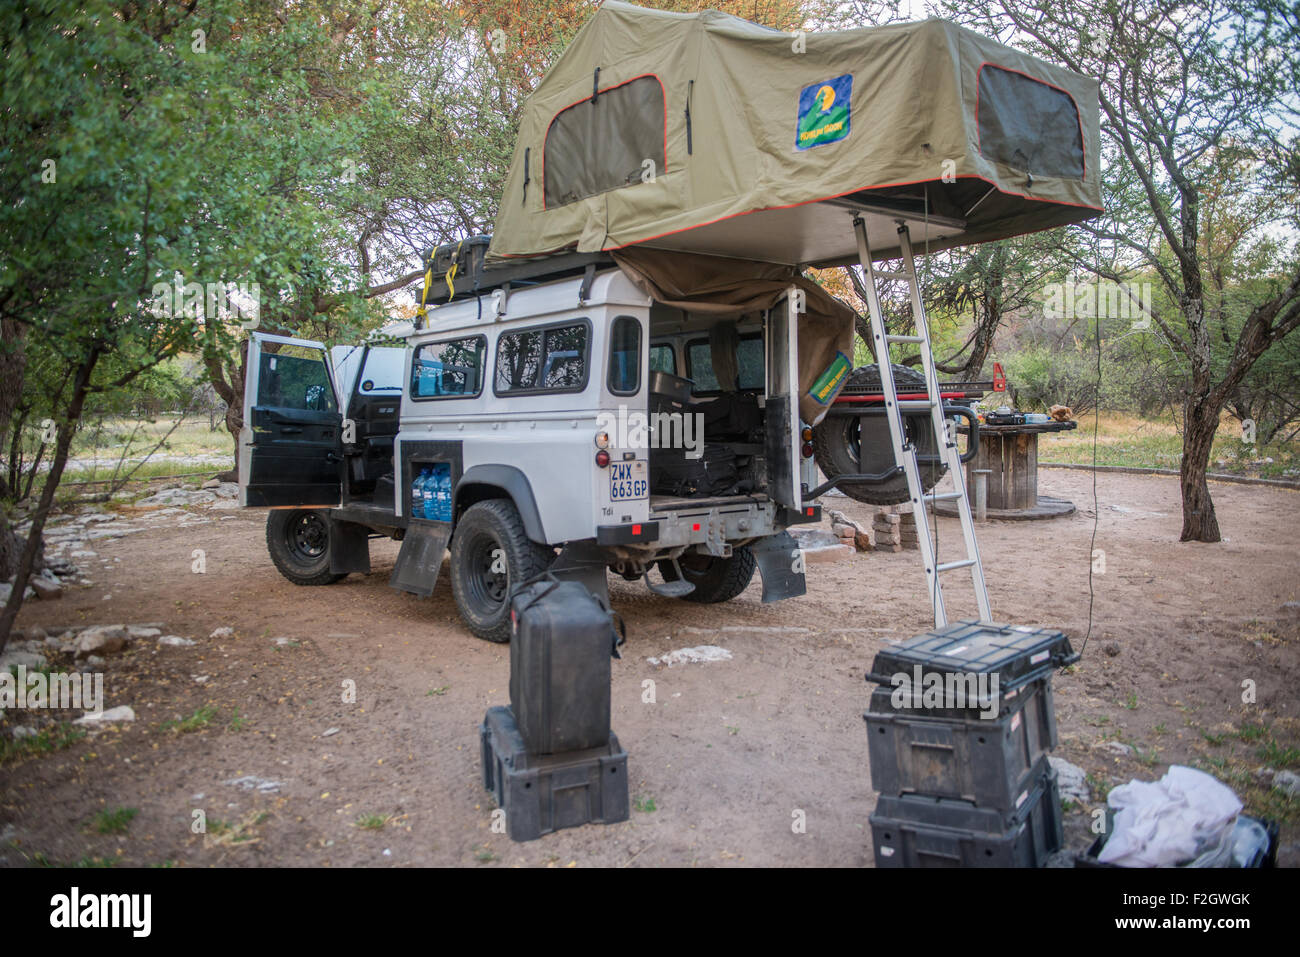 Camping-Setup auf Land Rover in Botswana, Afrika Stockfoto